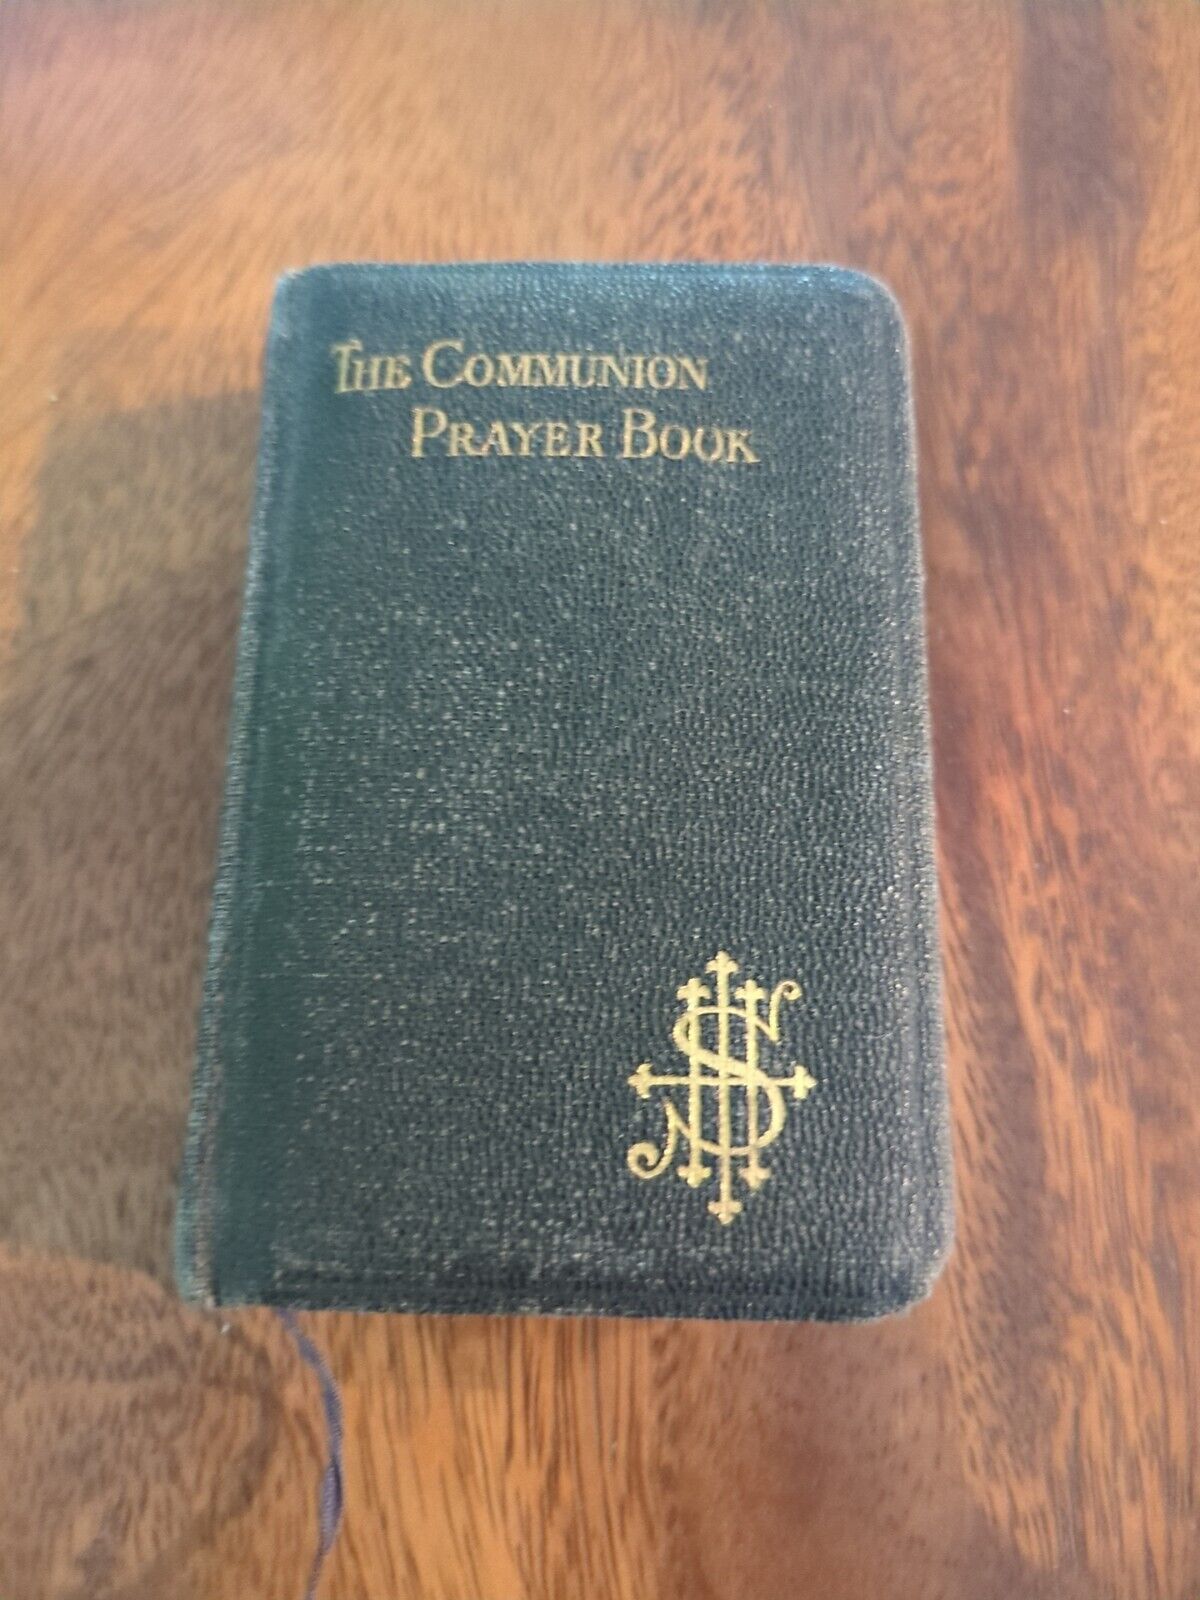 Vintage The Communion Prayer Book Sister Of St Joseph 19th Edition 4”x2.5” 